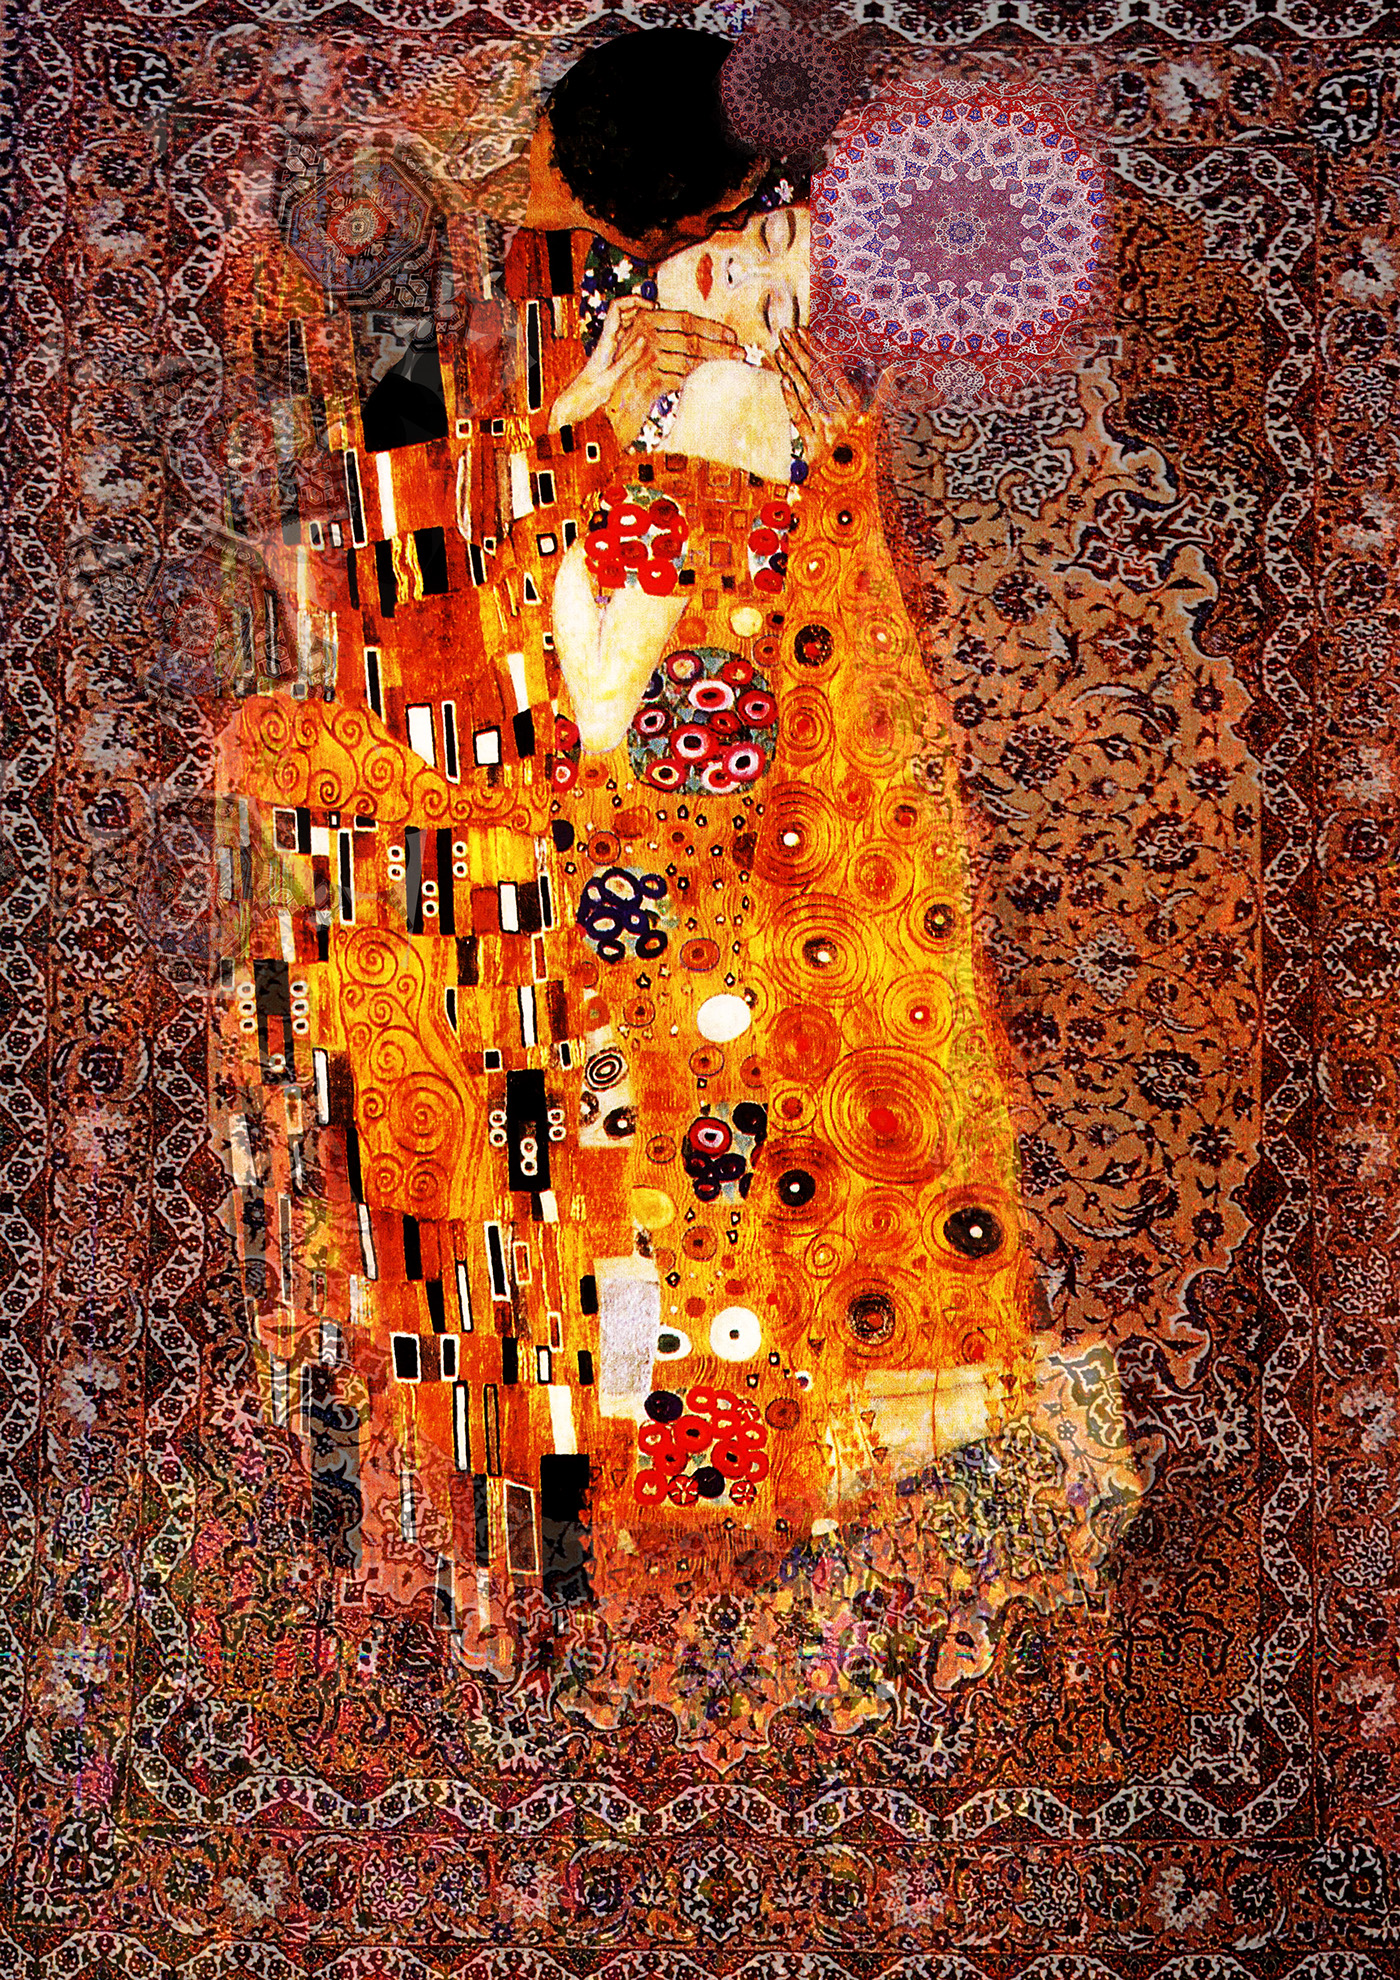 art artist contemporaryart GustavKlimt visualarts persian Miniature traditionalarts